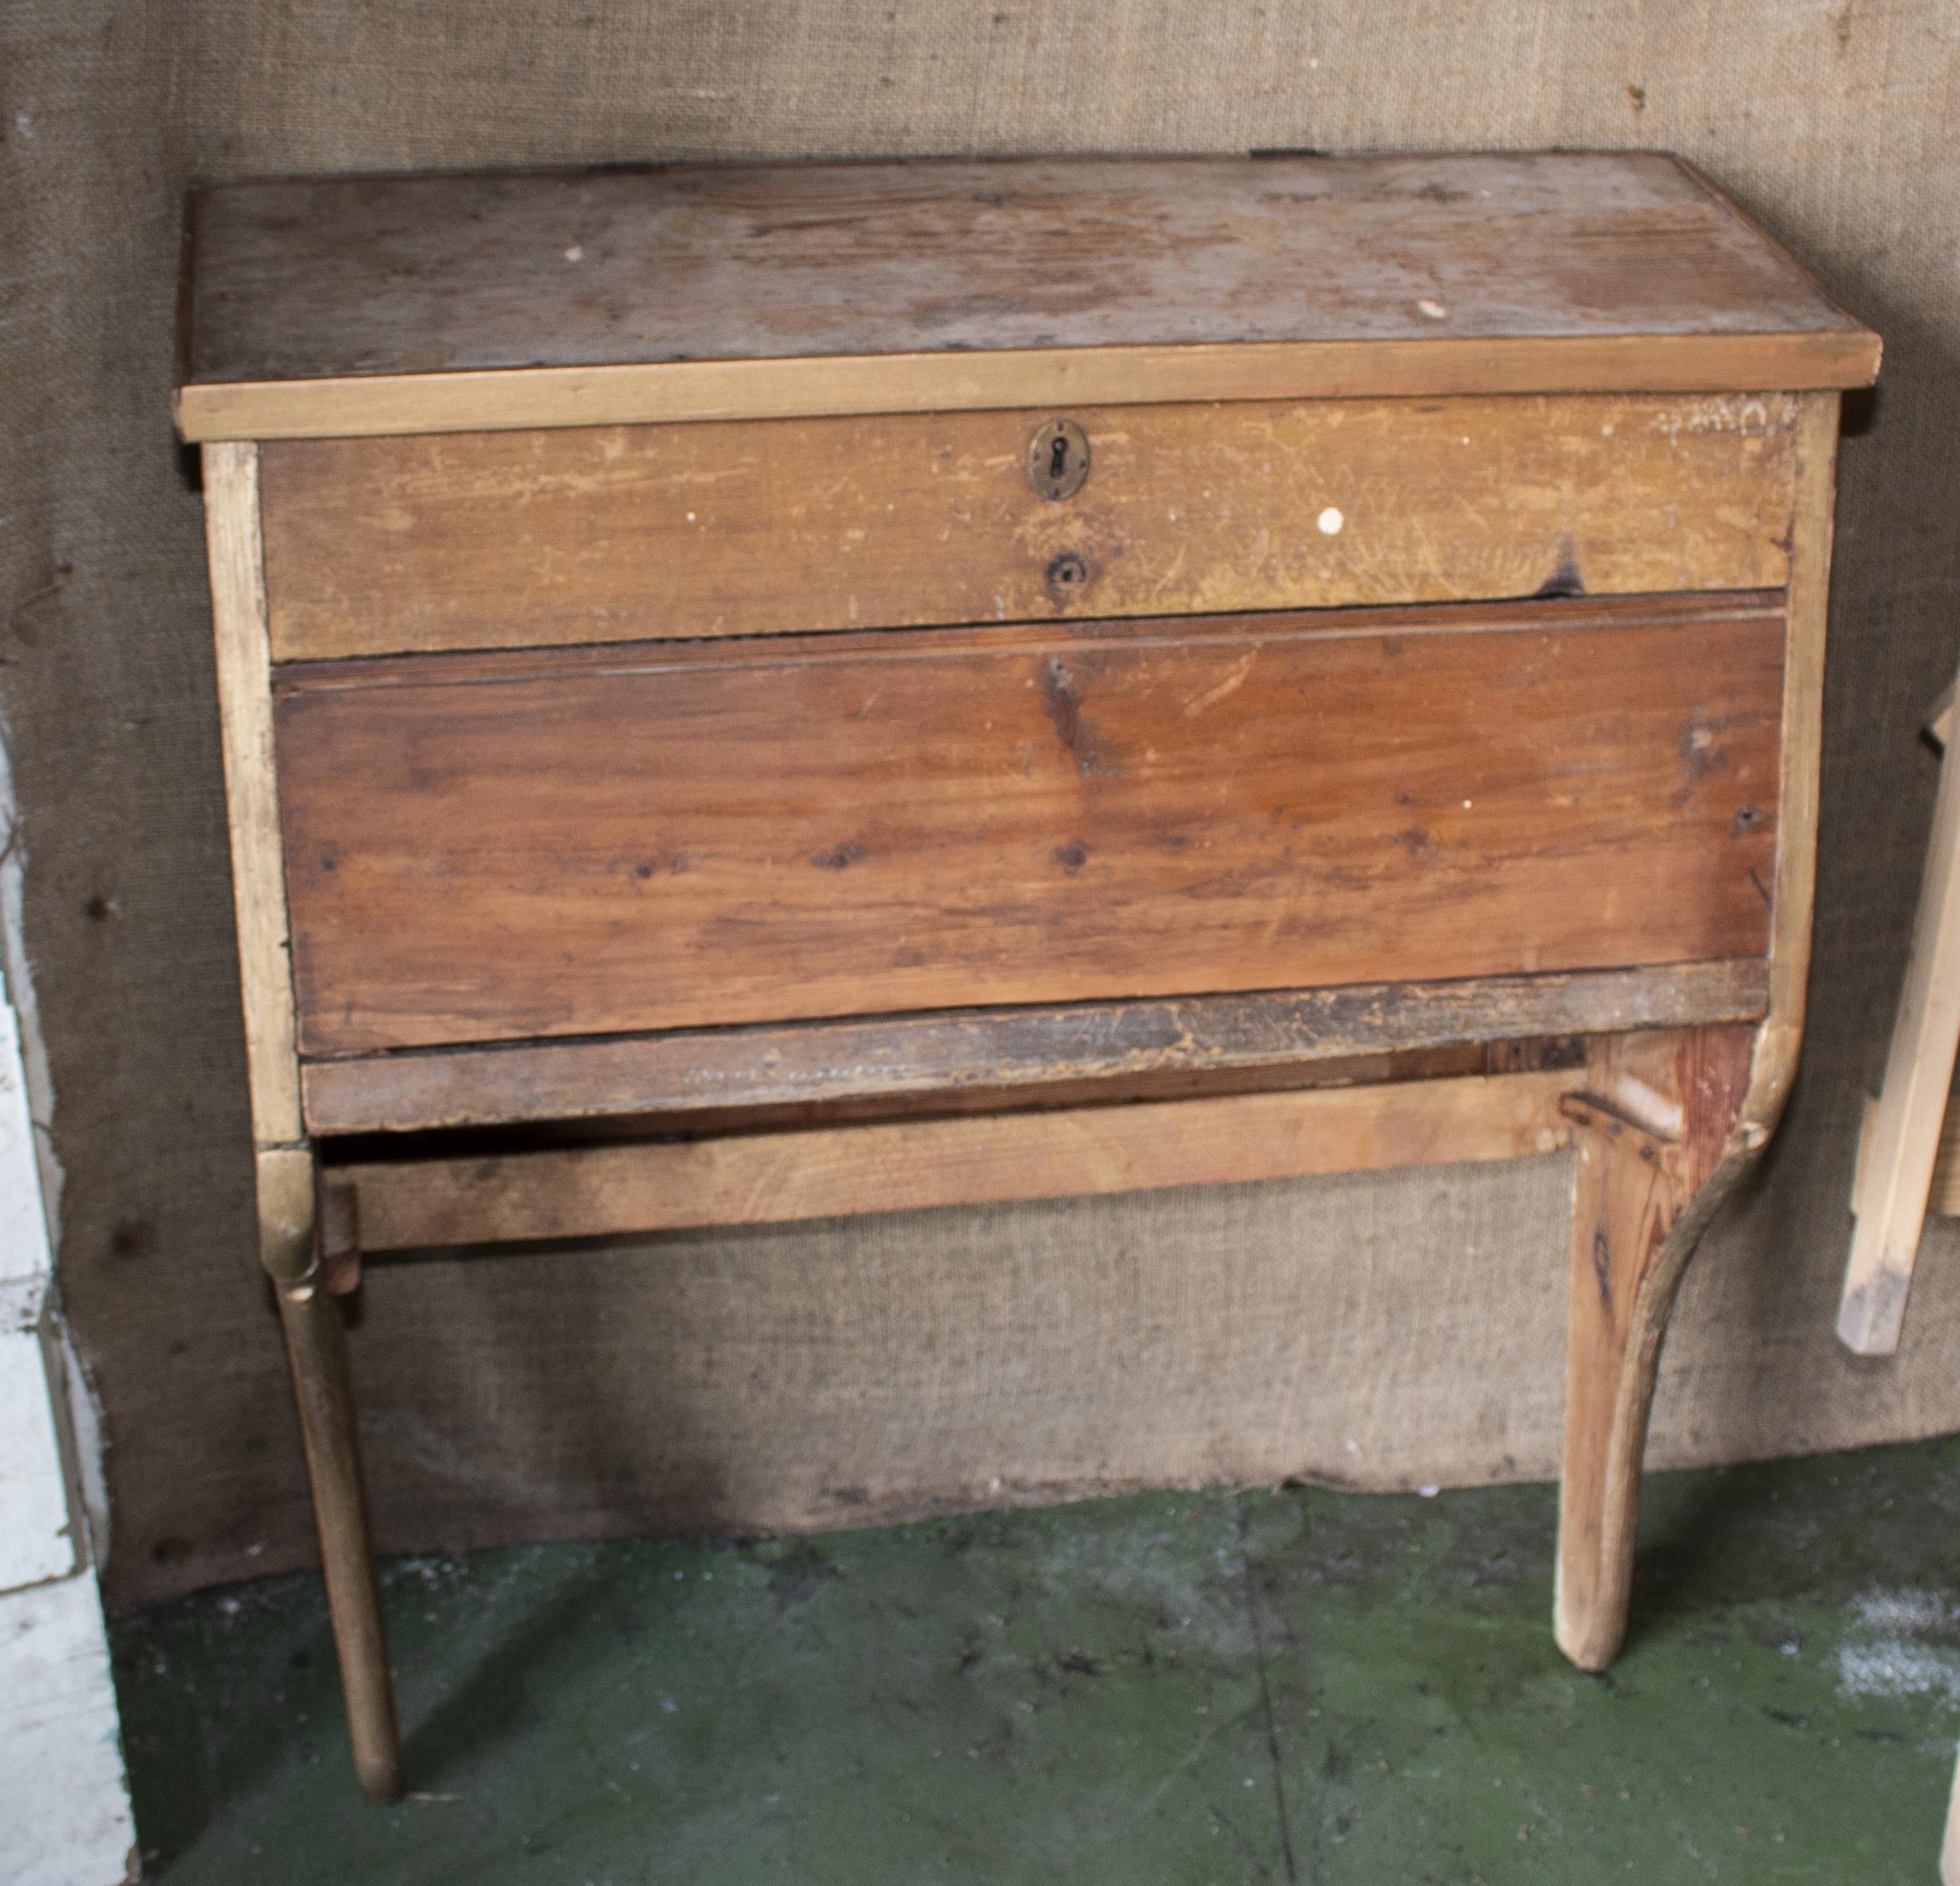 A vintage wooden grain/flour bin